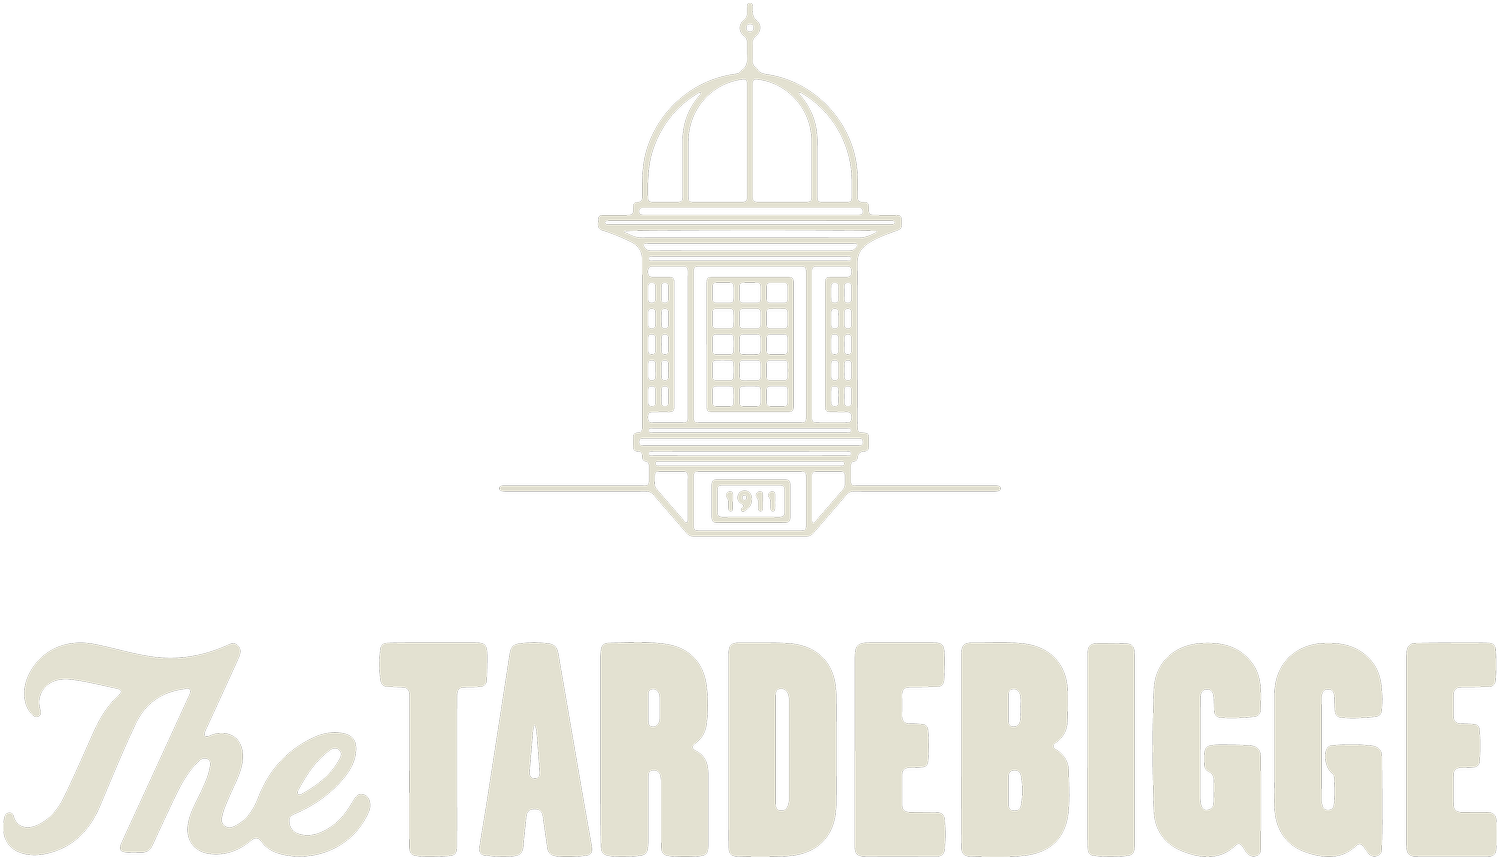 The Tardebigge